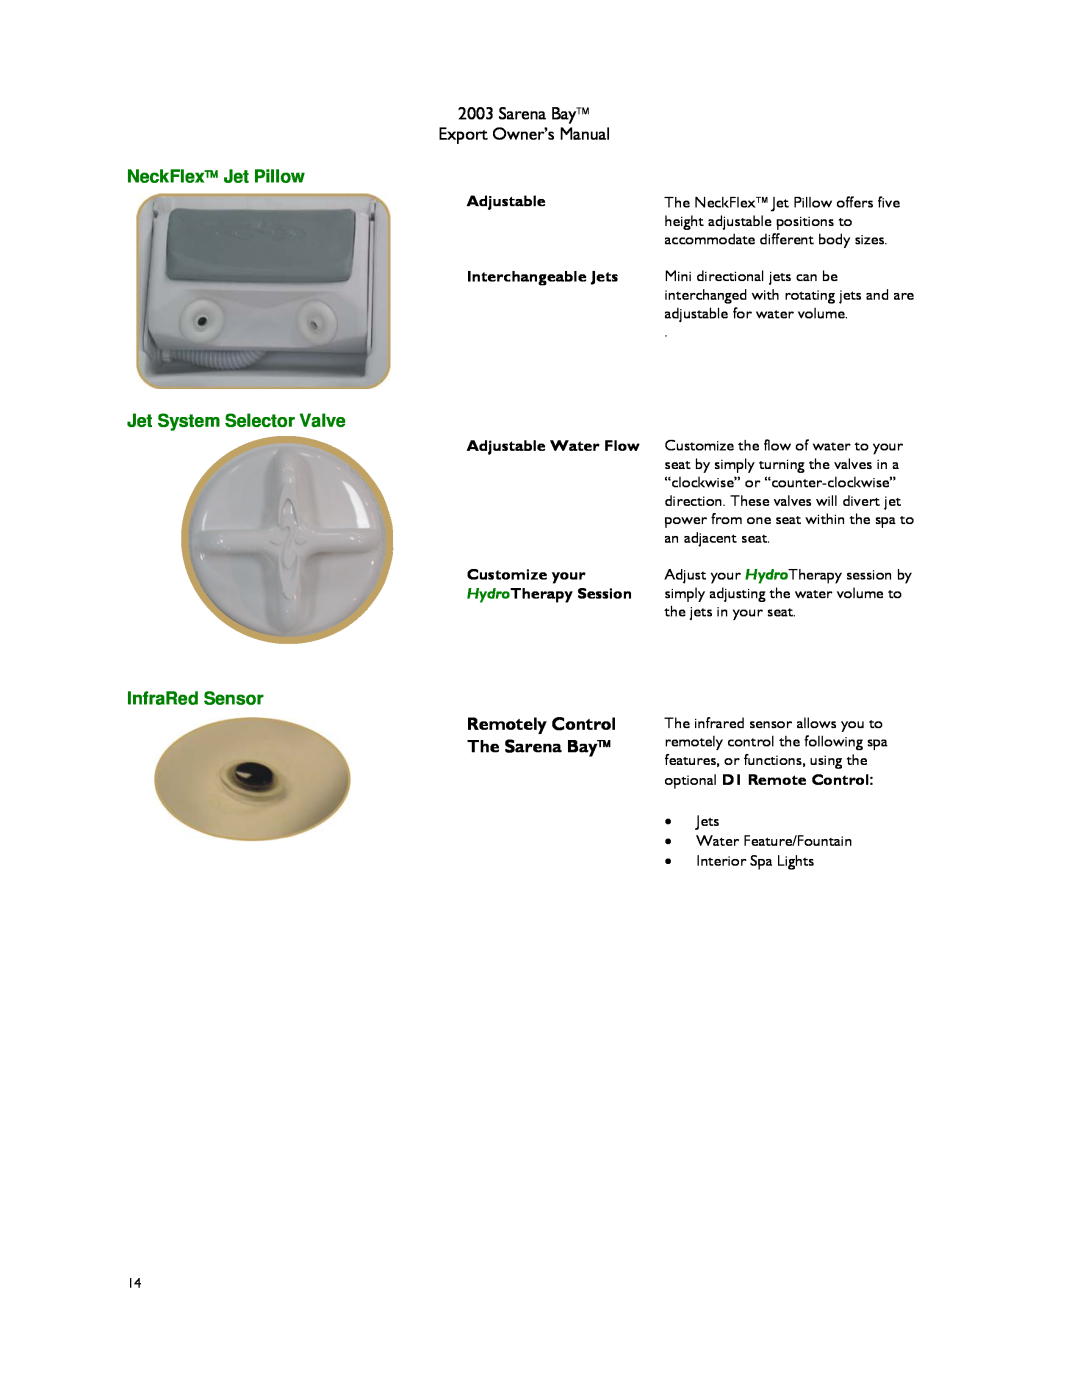 Dimension One Spas Sarena Bay manual NeckFlex Jet Pillow, Jet System Selector Valve, InfraRed Sensor 